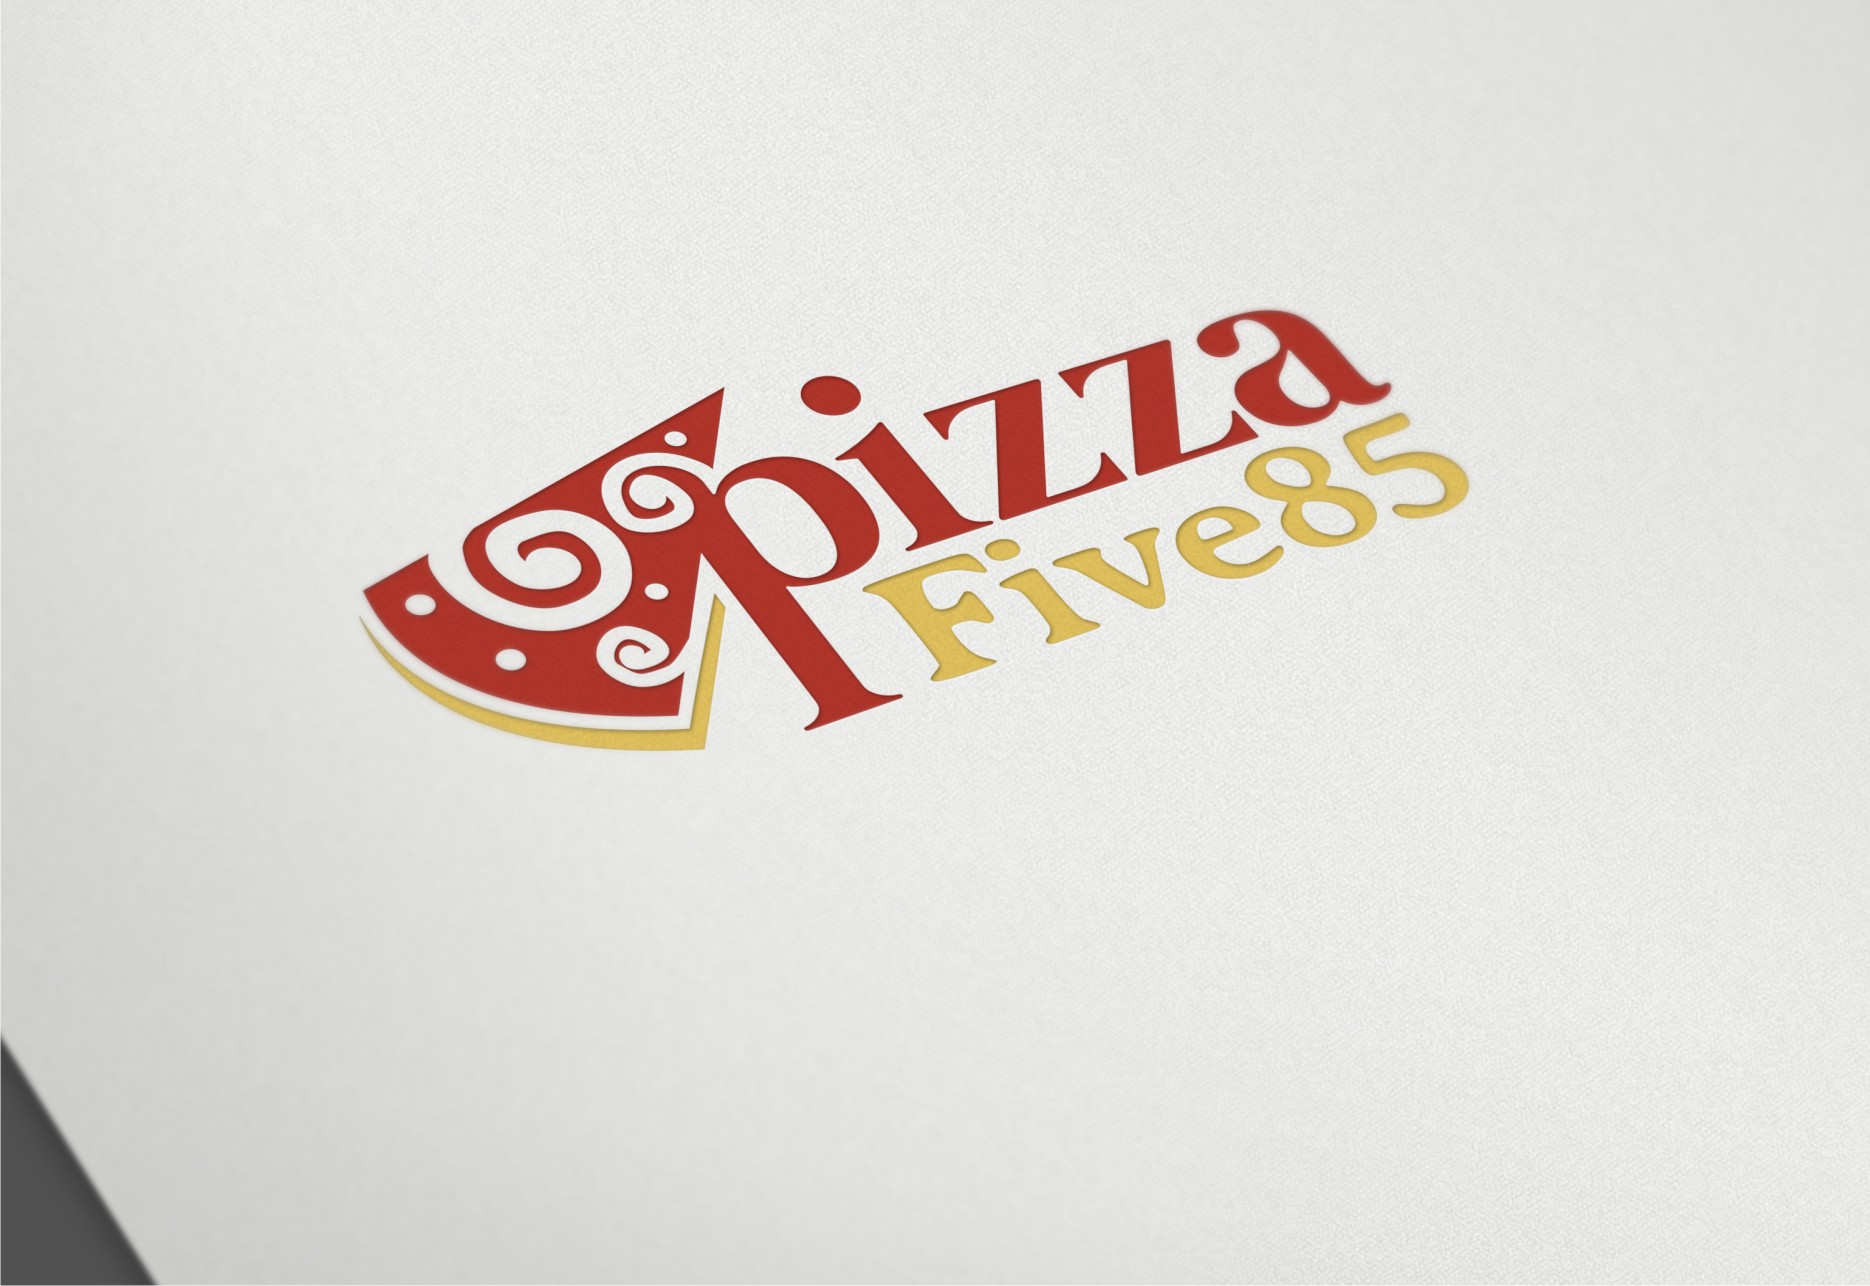 Pizza 585 Investments LLC